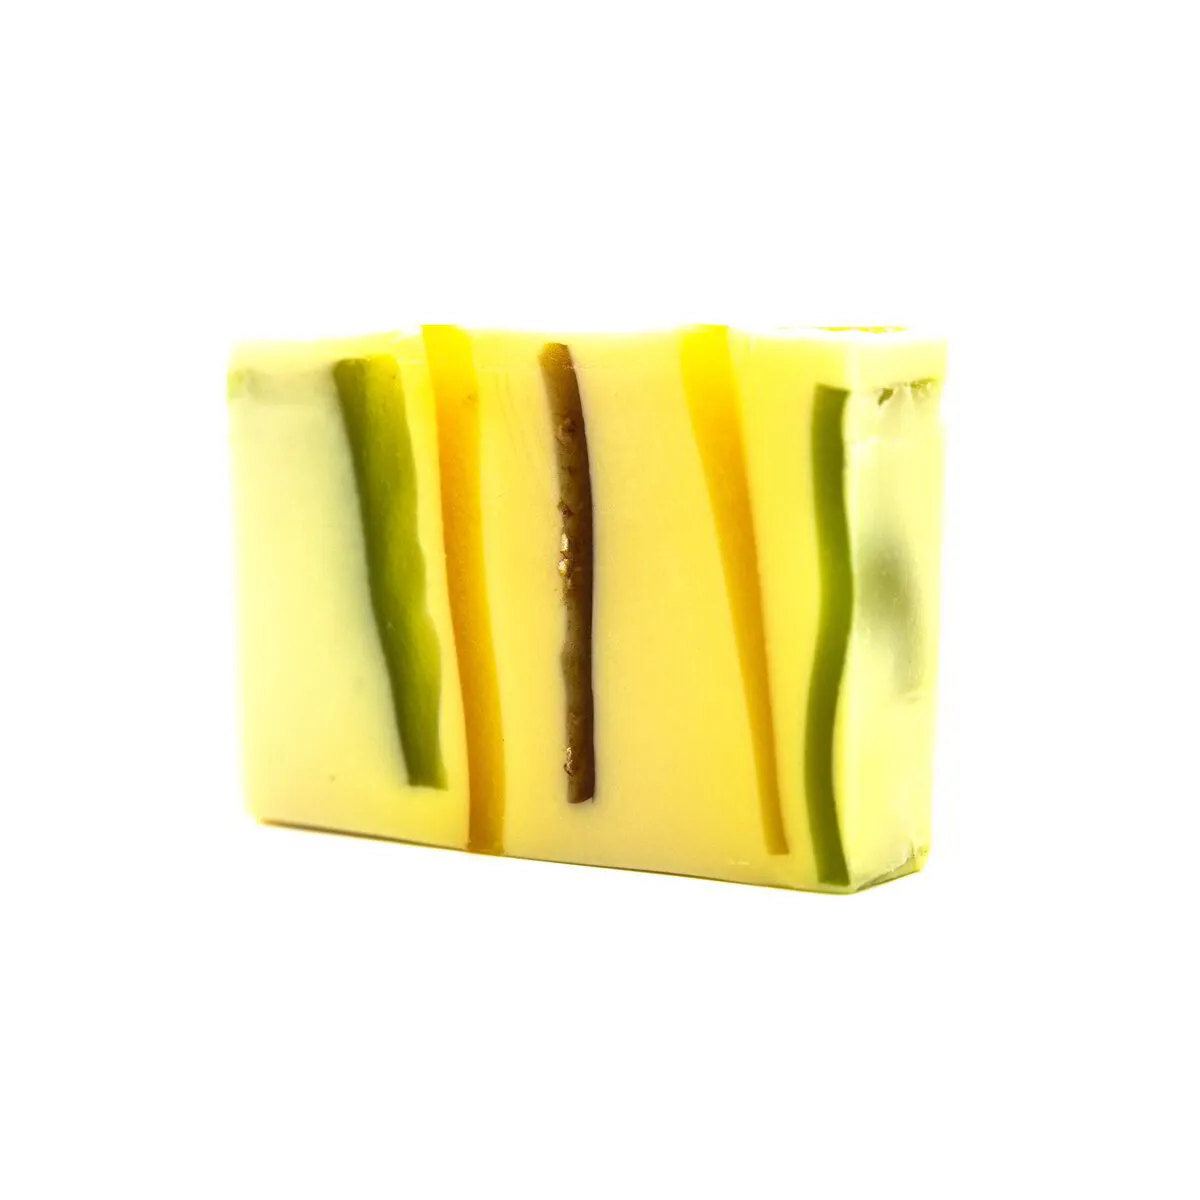 Coconut Lemongrass Soap